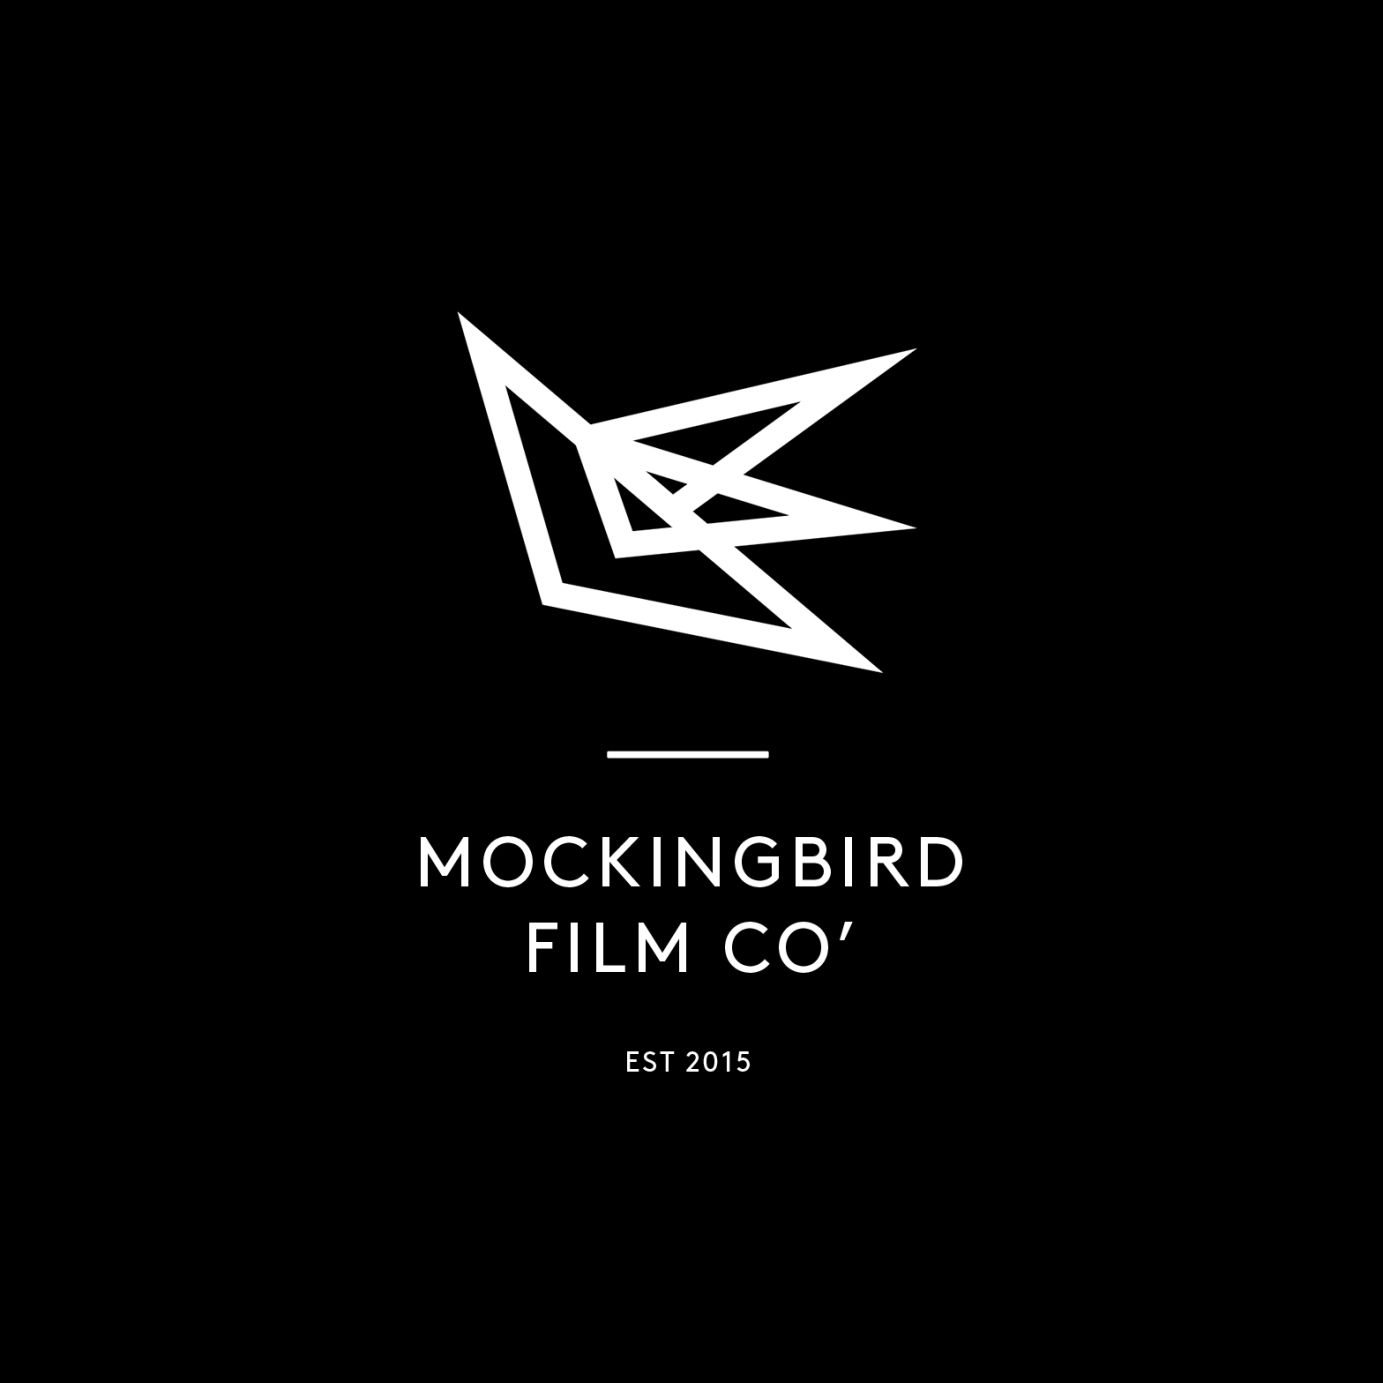 Mockingbird Film Co' - 2020 Show Reel